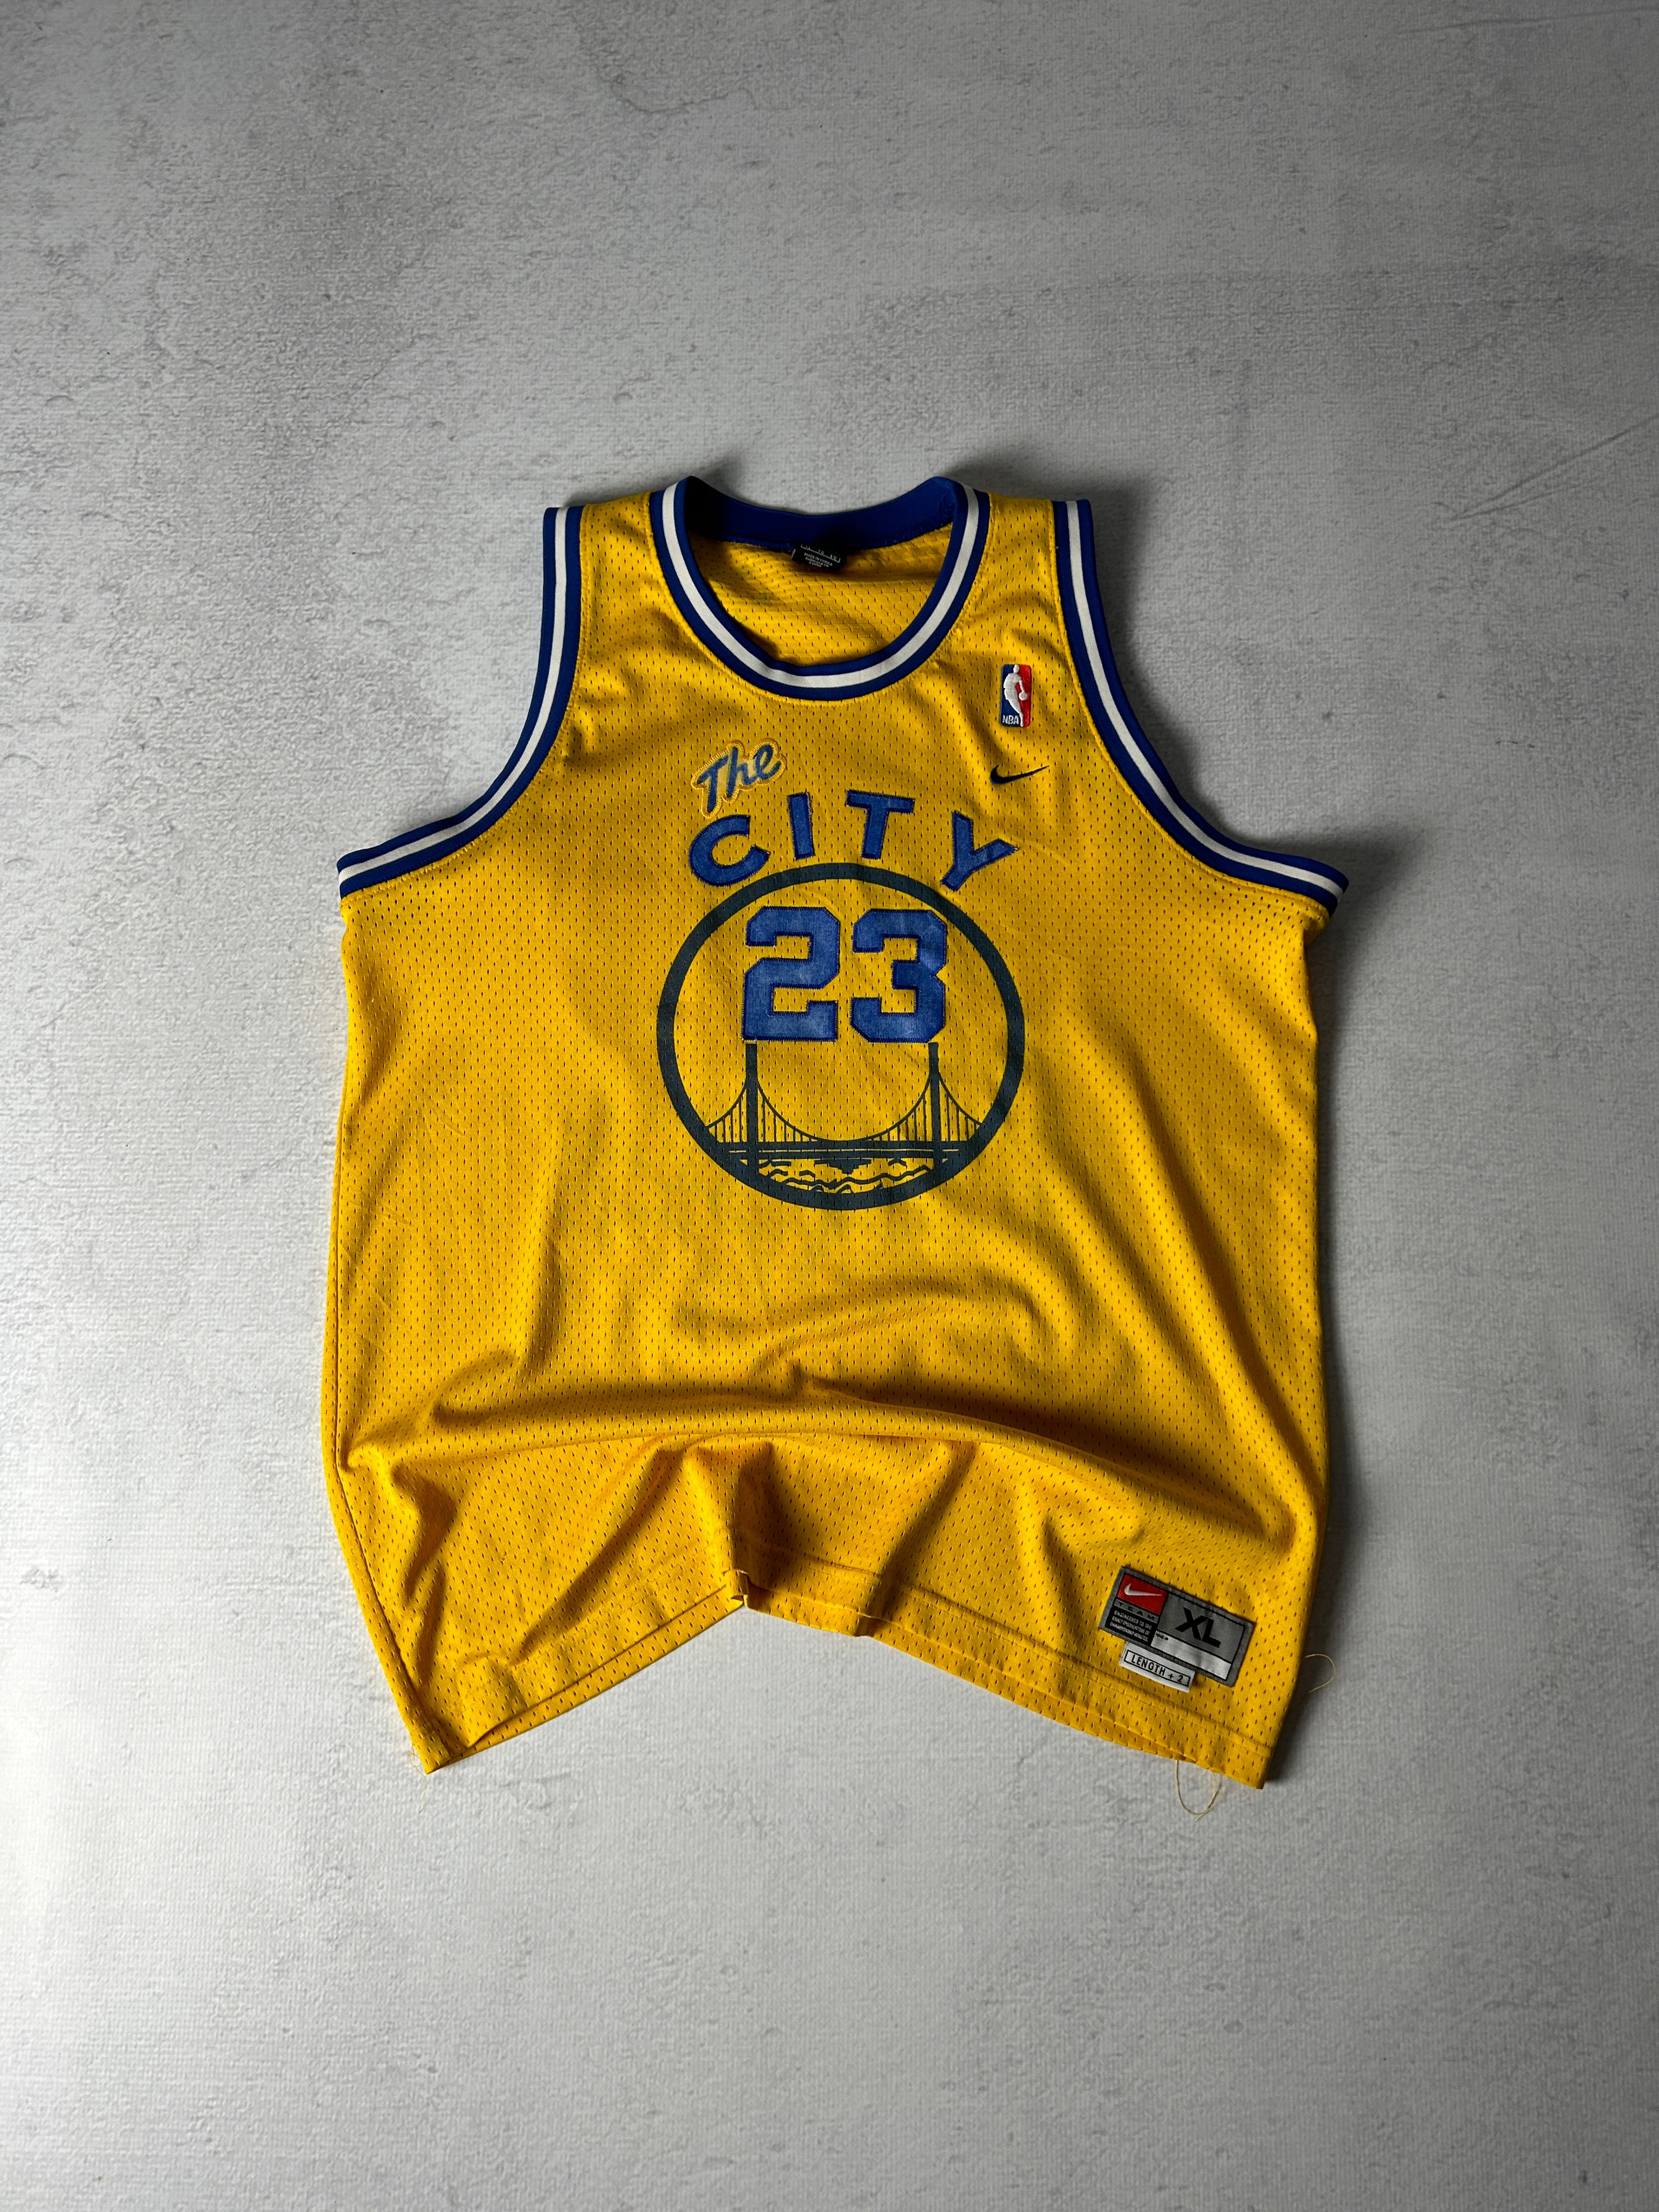 Vintage Nike NBA Golden State Warriors Jason Richardson #23 Jersey - Men's XL